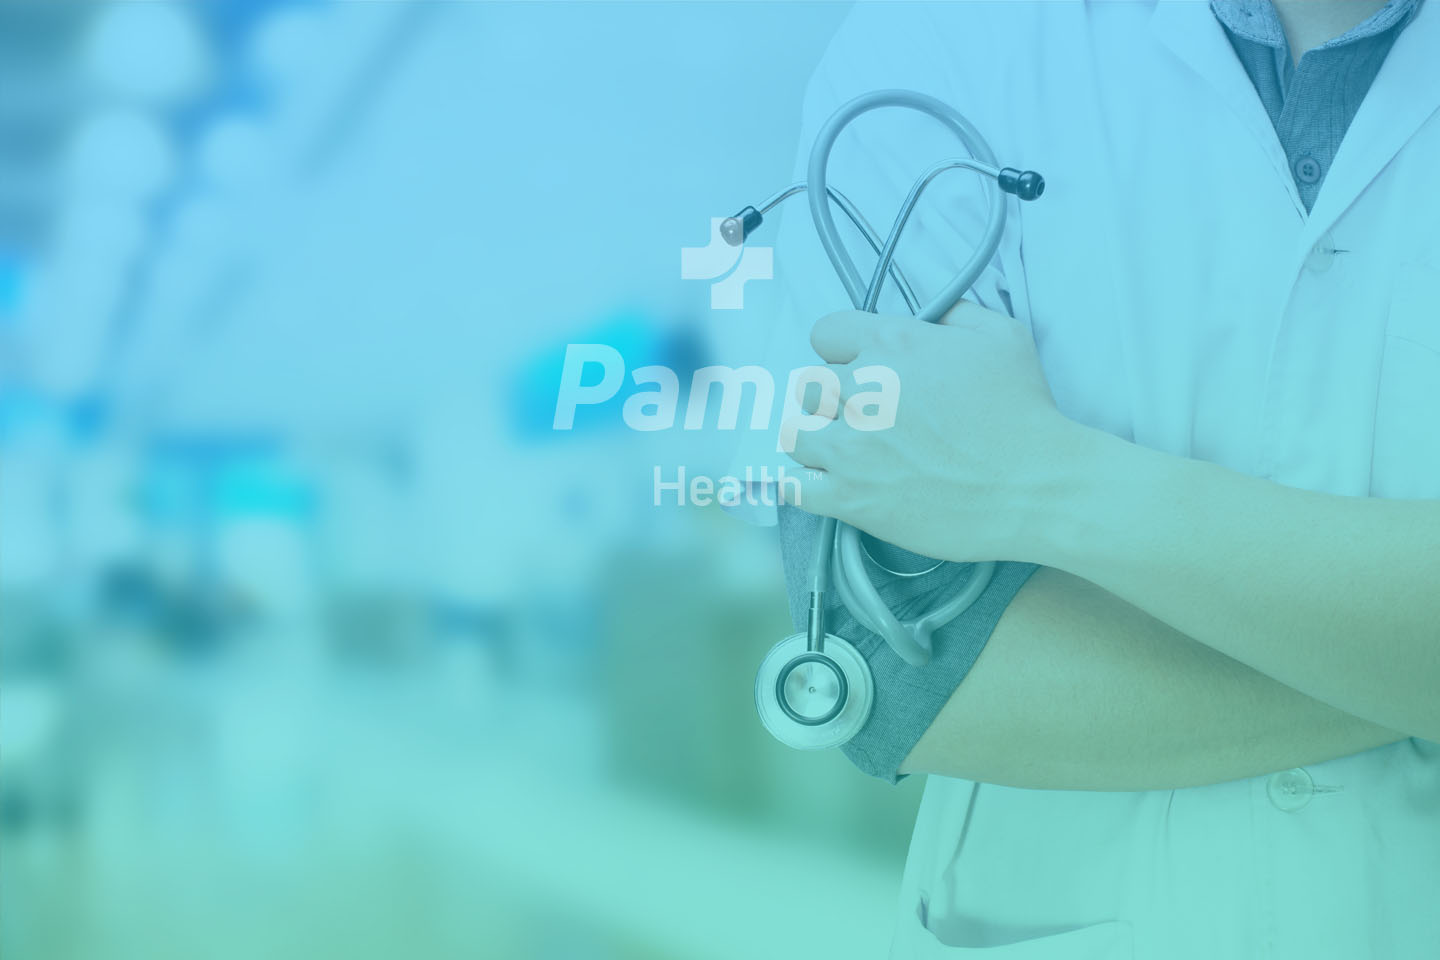 Pampa Health